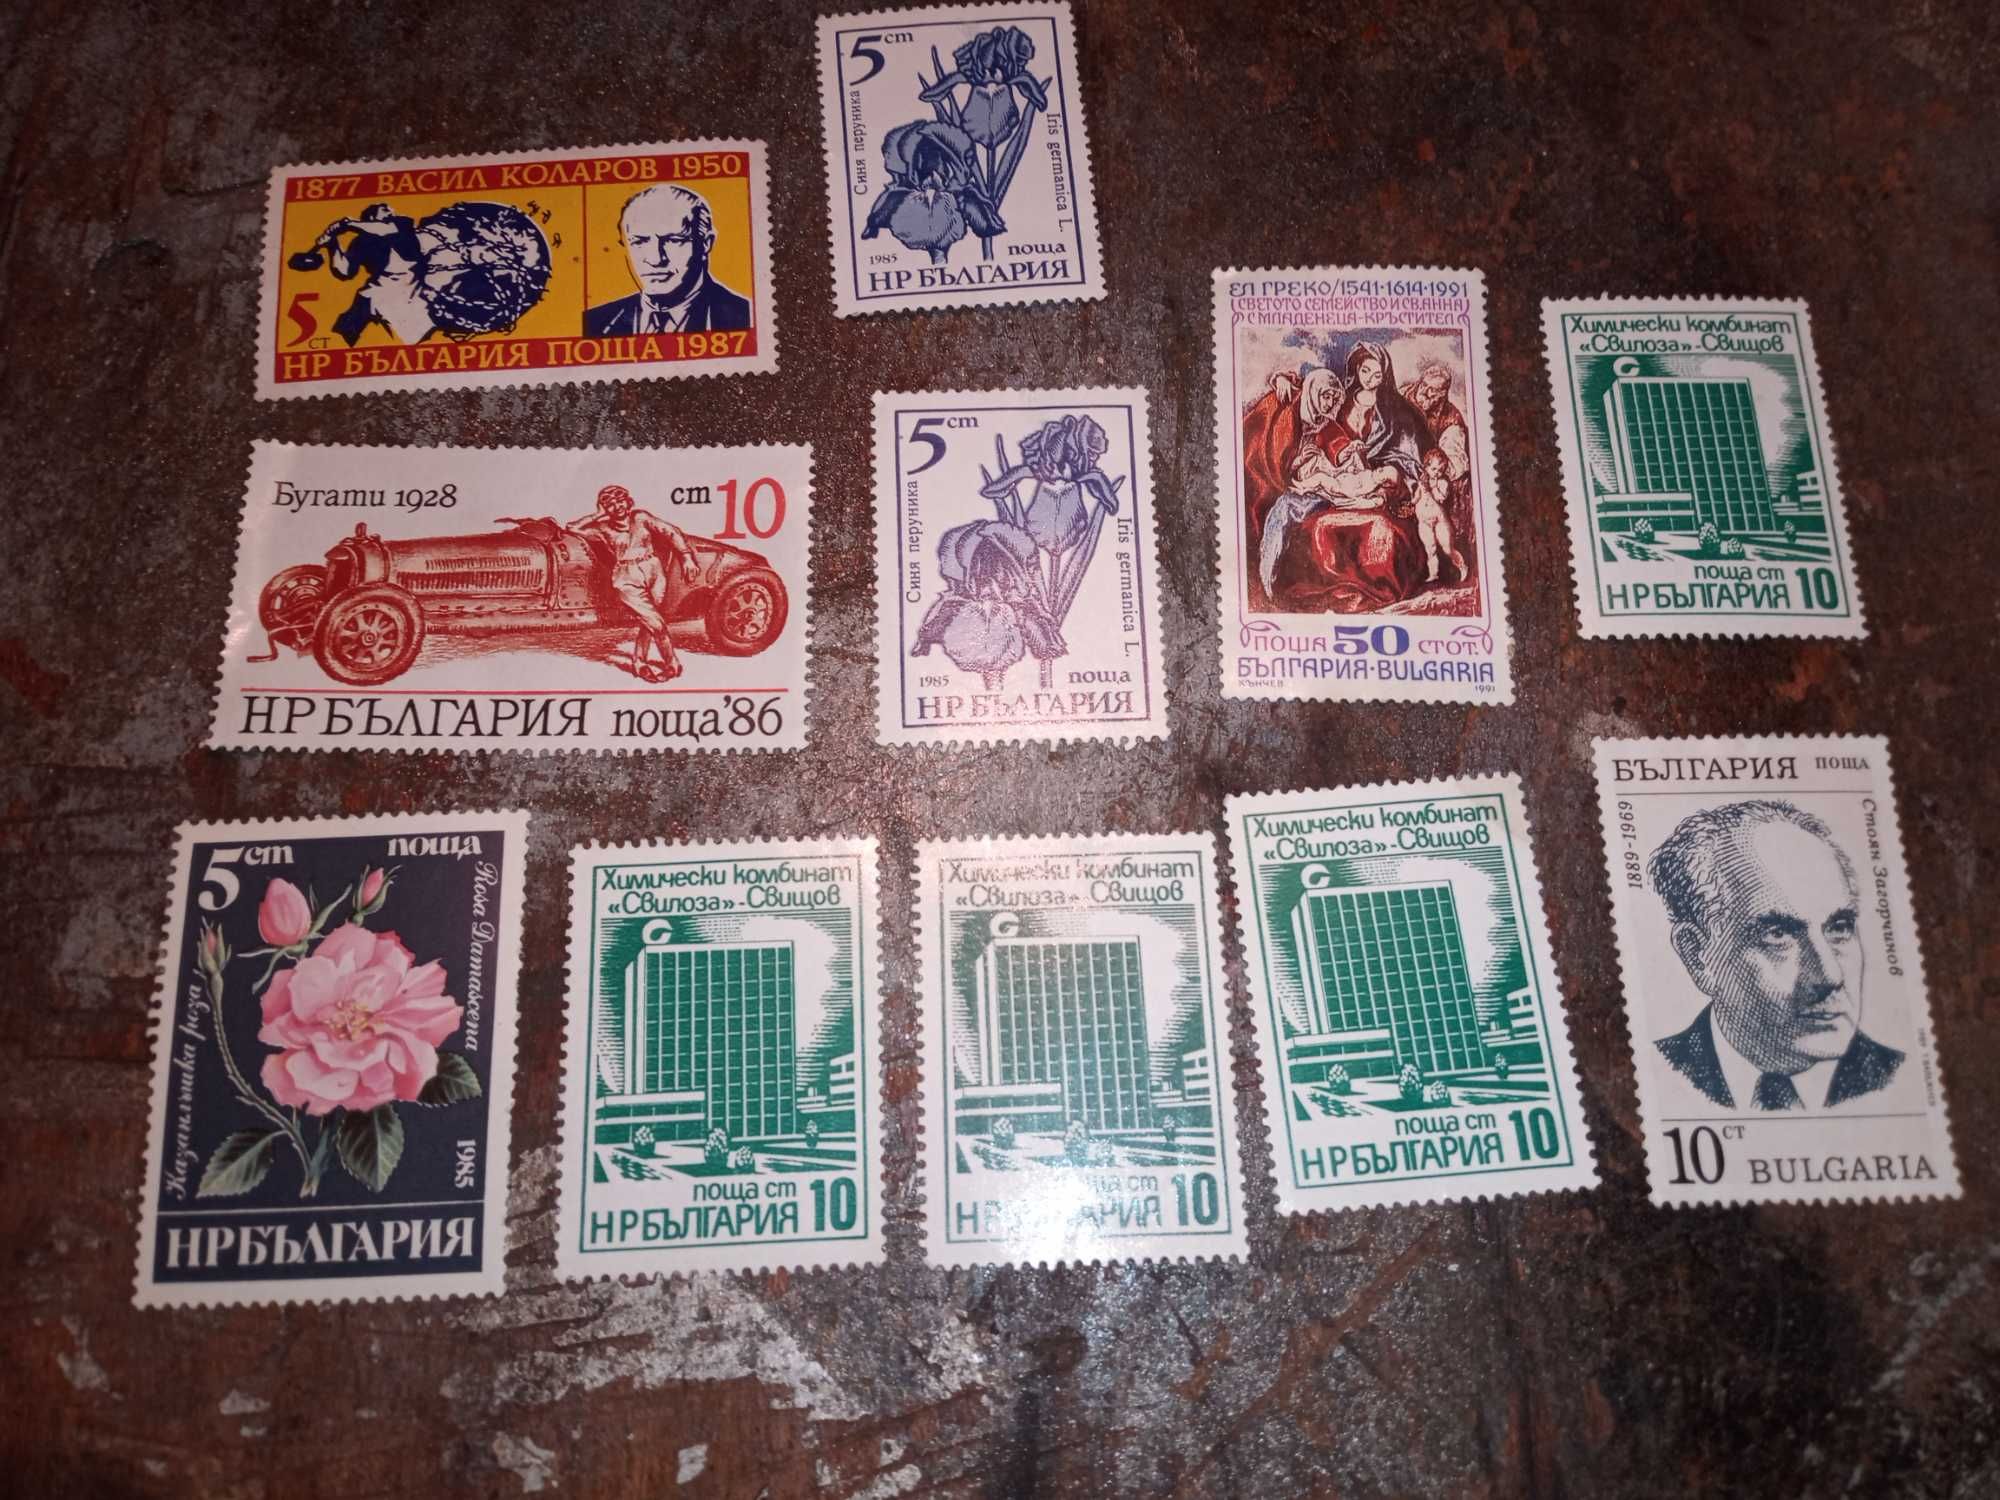 Български Картички,Марки без печати,Стари Руски Банкноти.